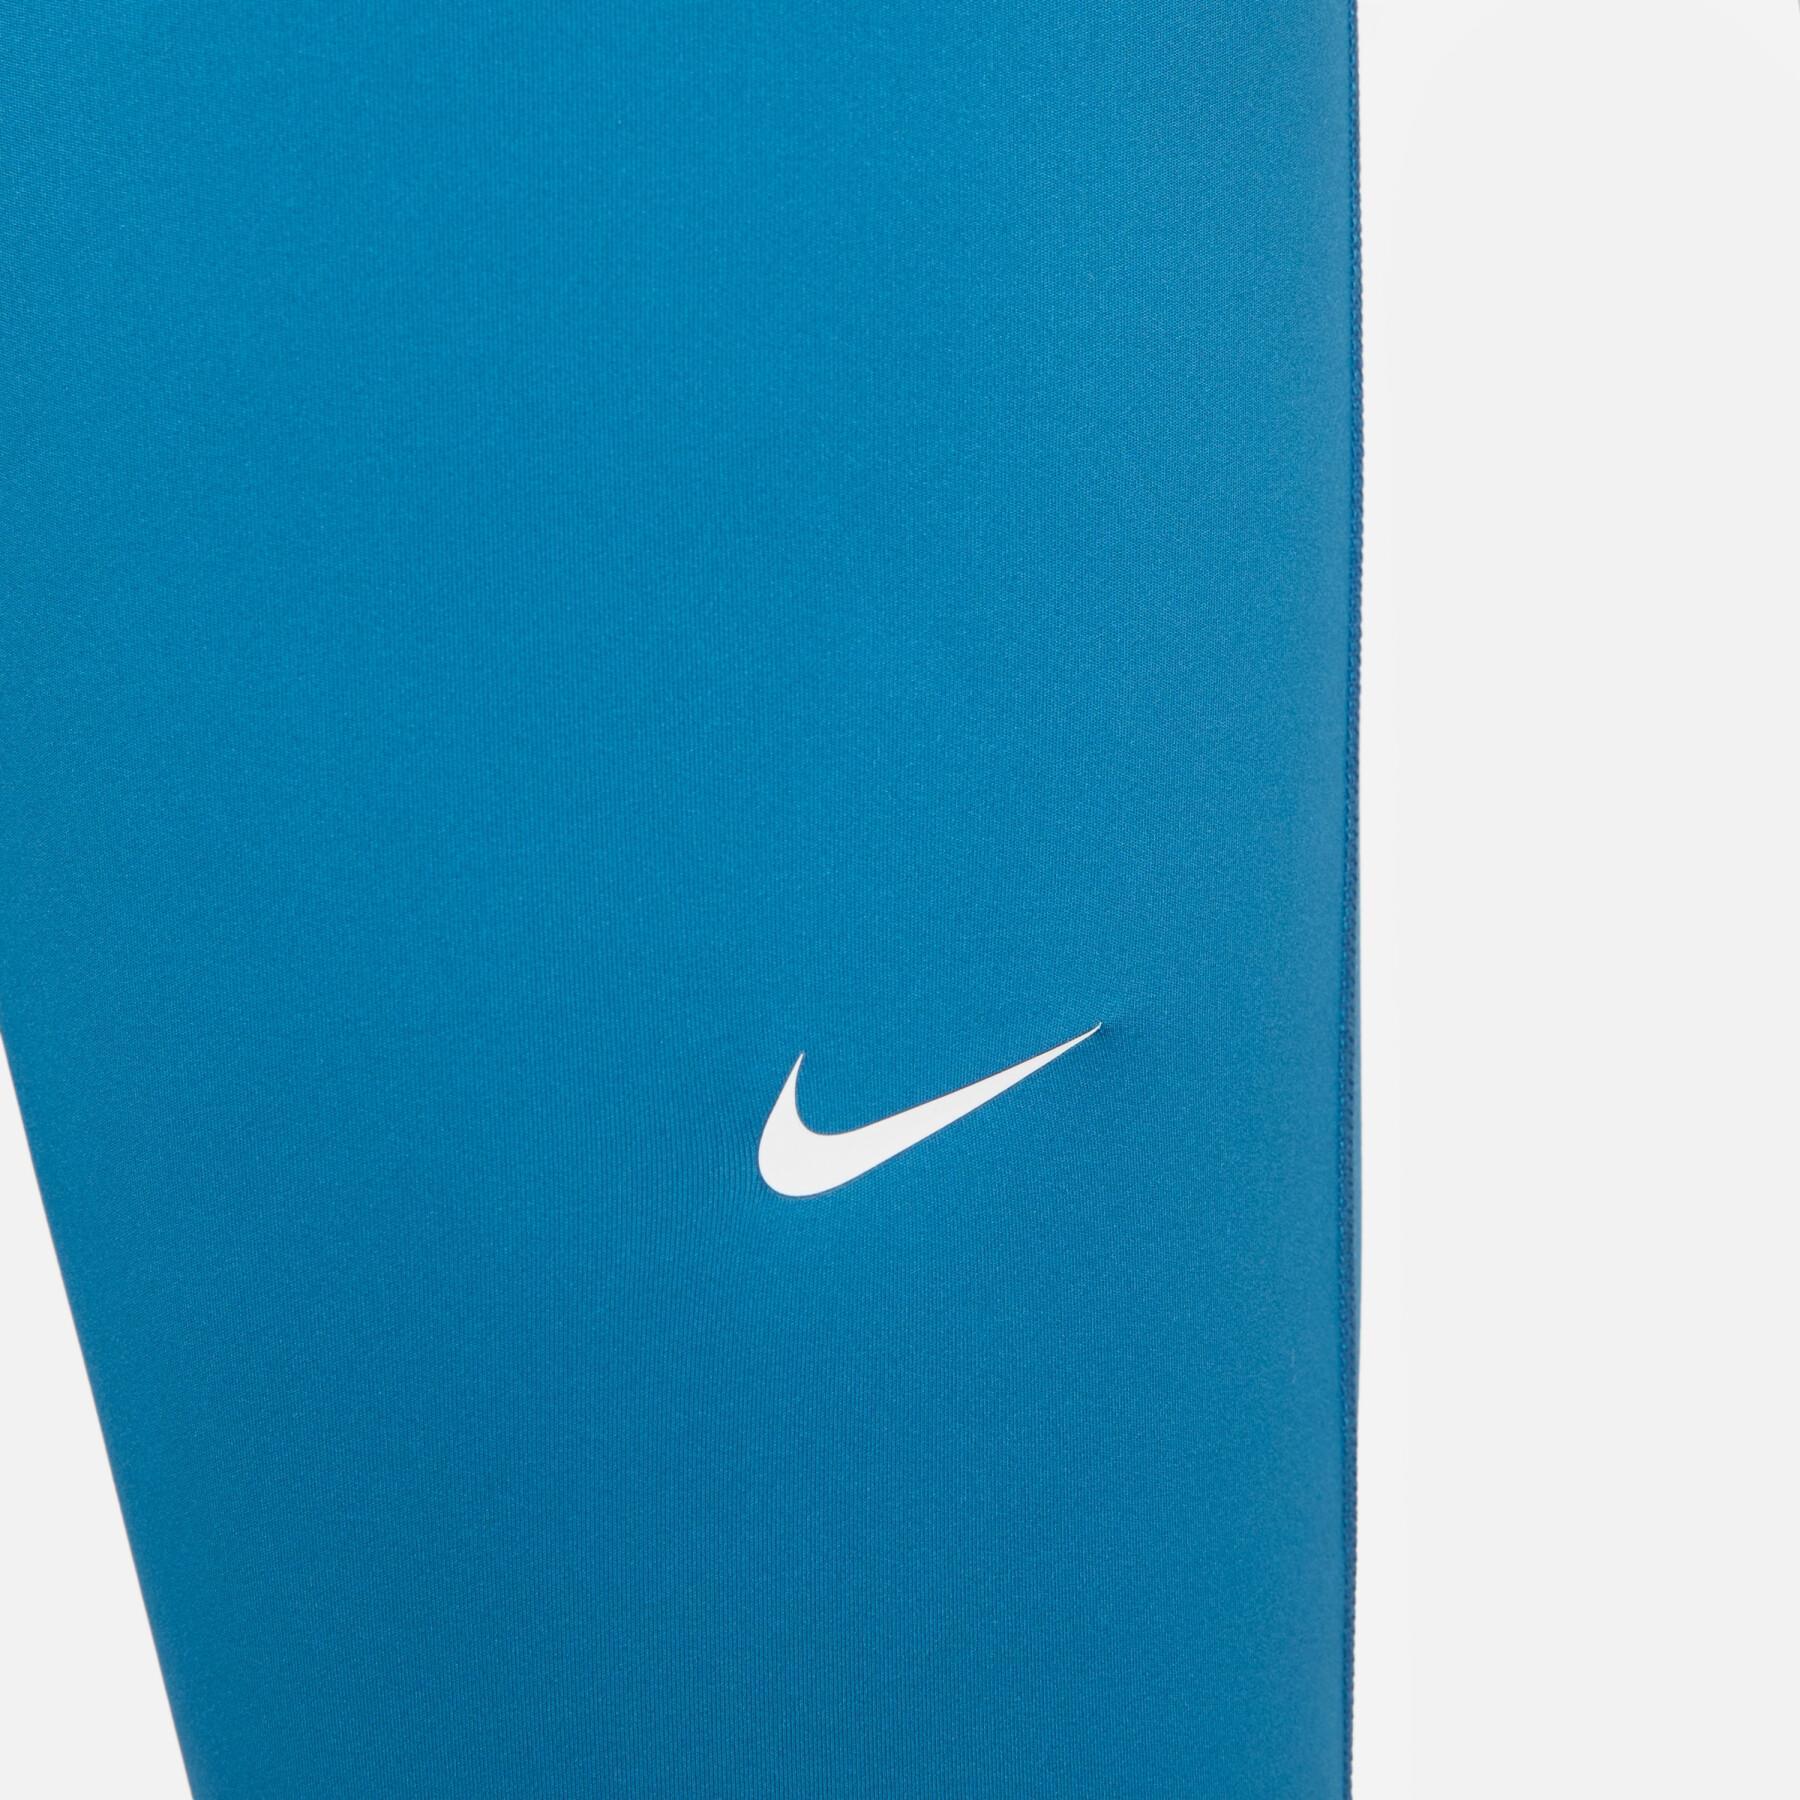 Leggings para mulher Nike Pro 365